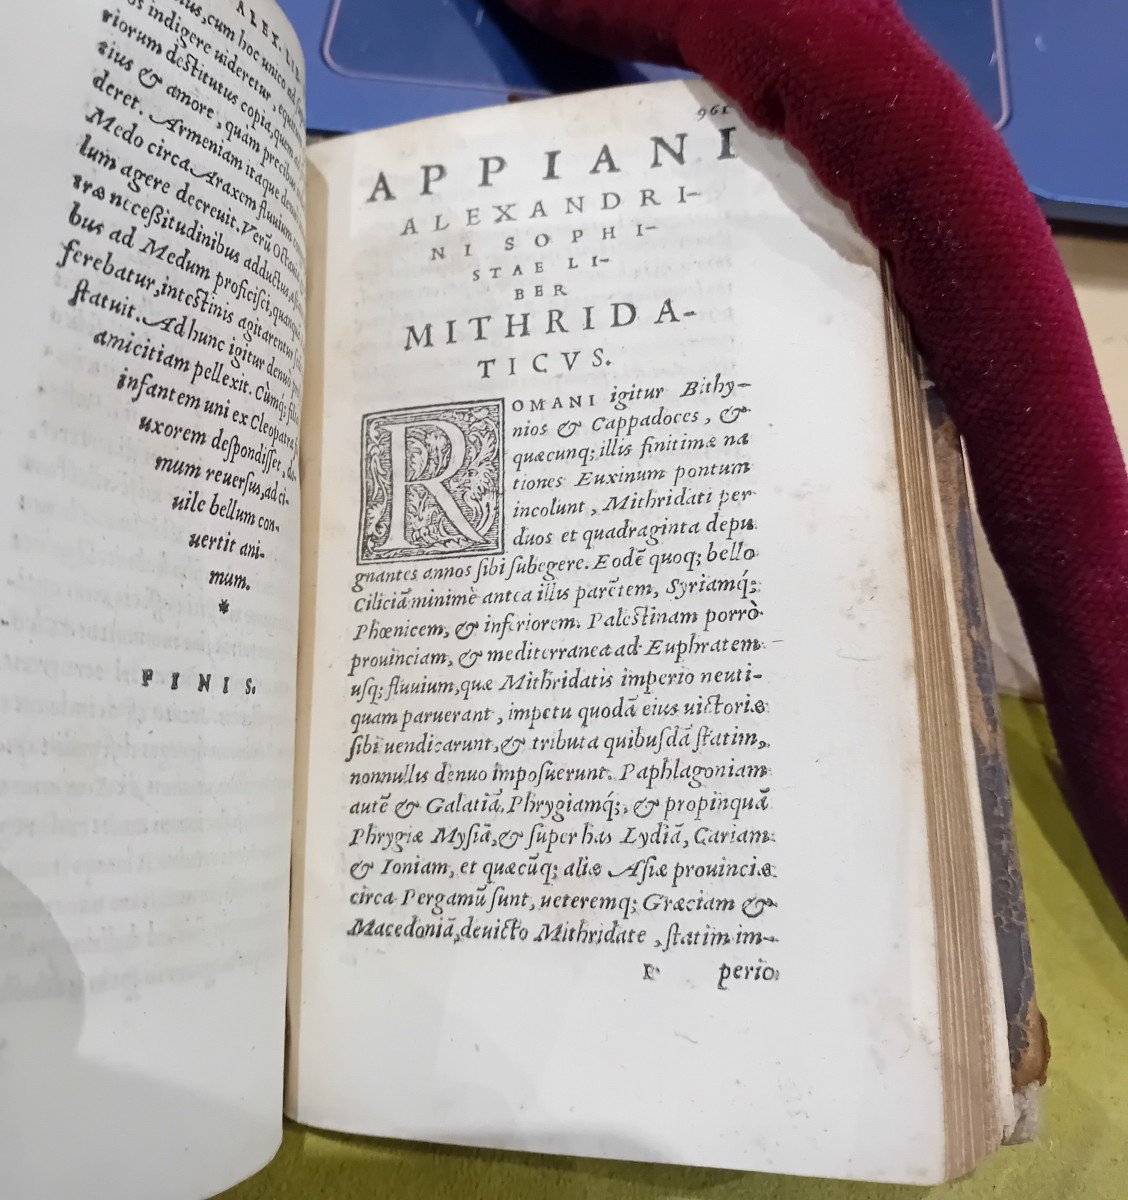 Appiani Alexandri Ni Sophi-stae 1551-photo-2